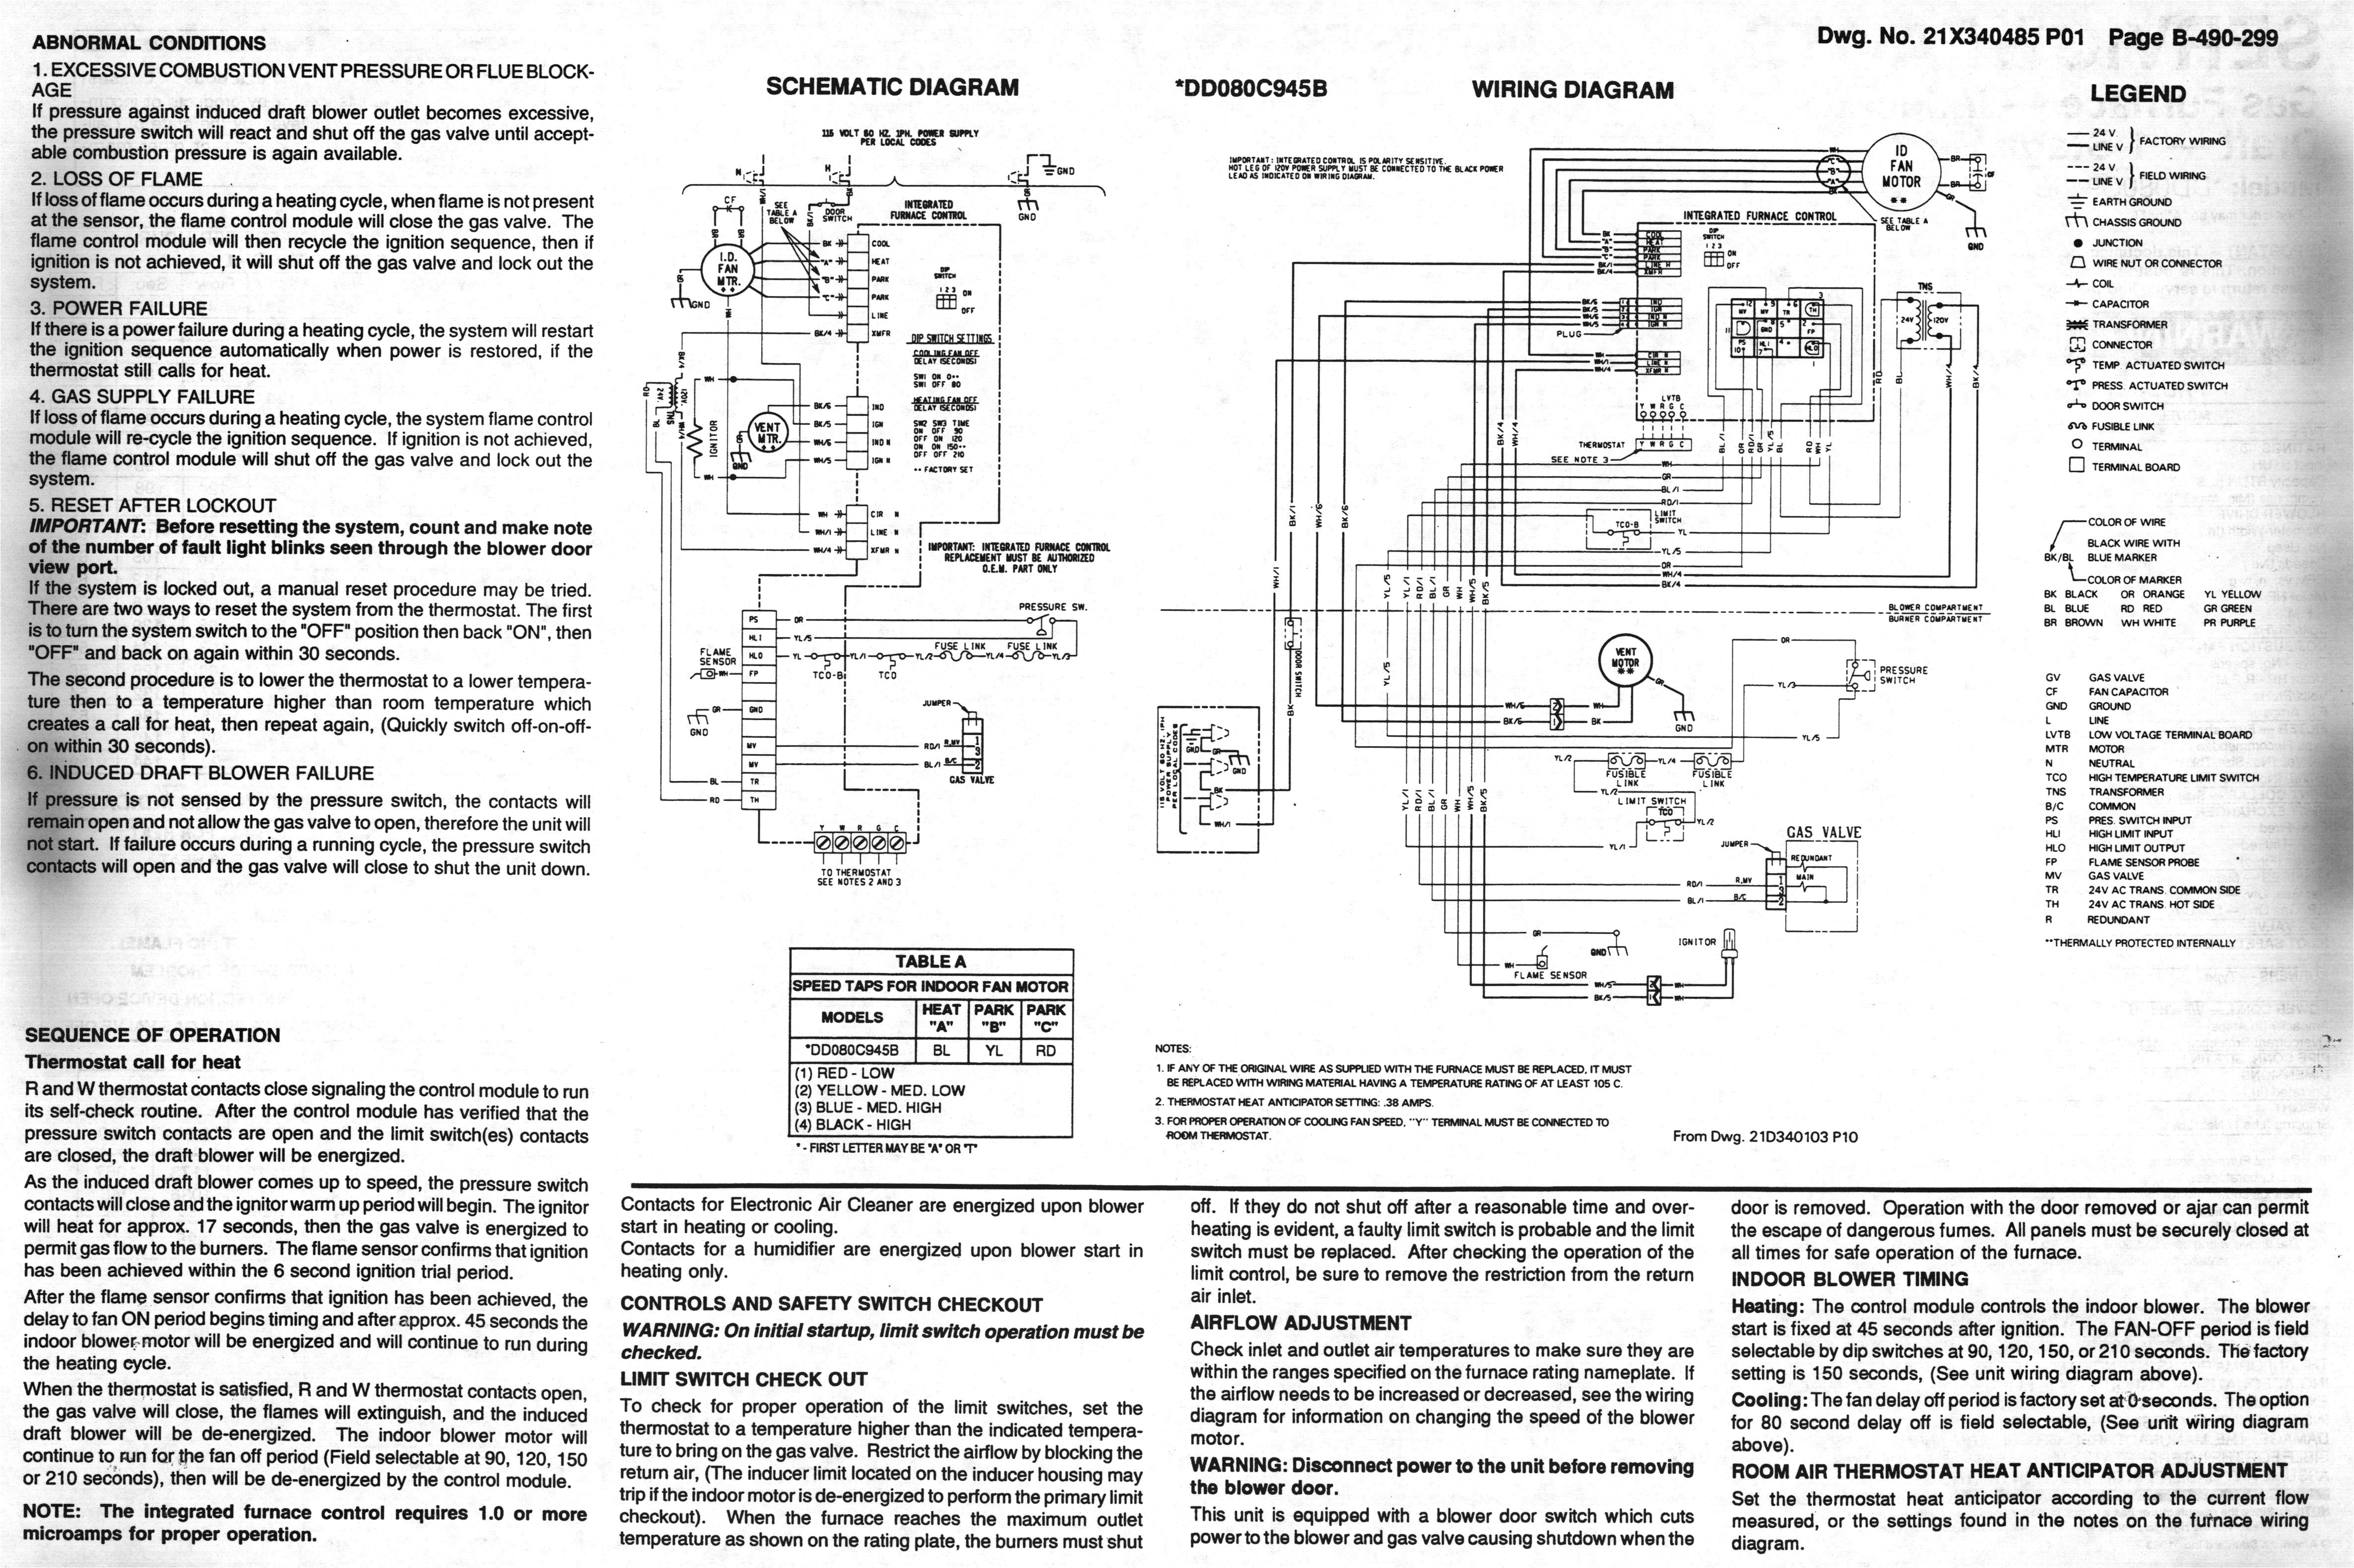 trane pressor wiring diagrams model wiring diagram img trane wiring diagrams model glenda